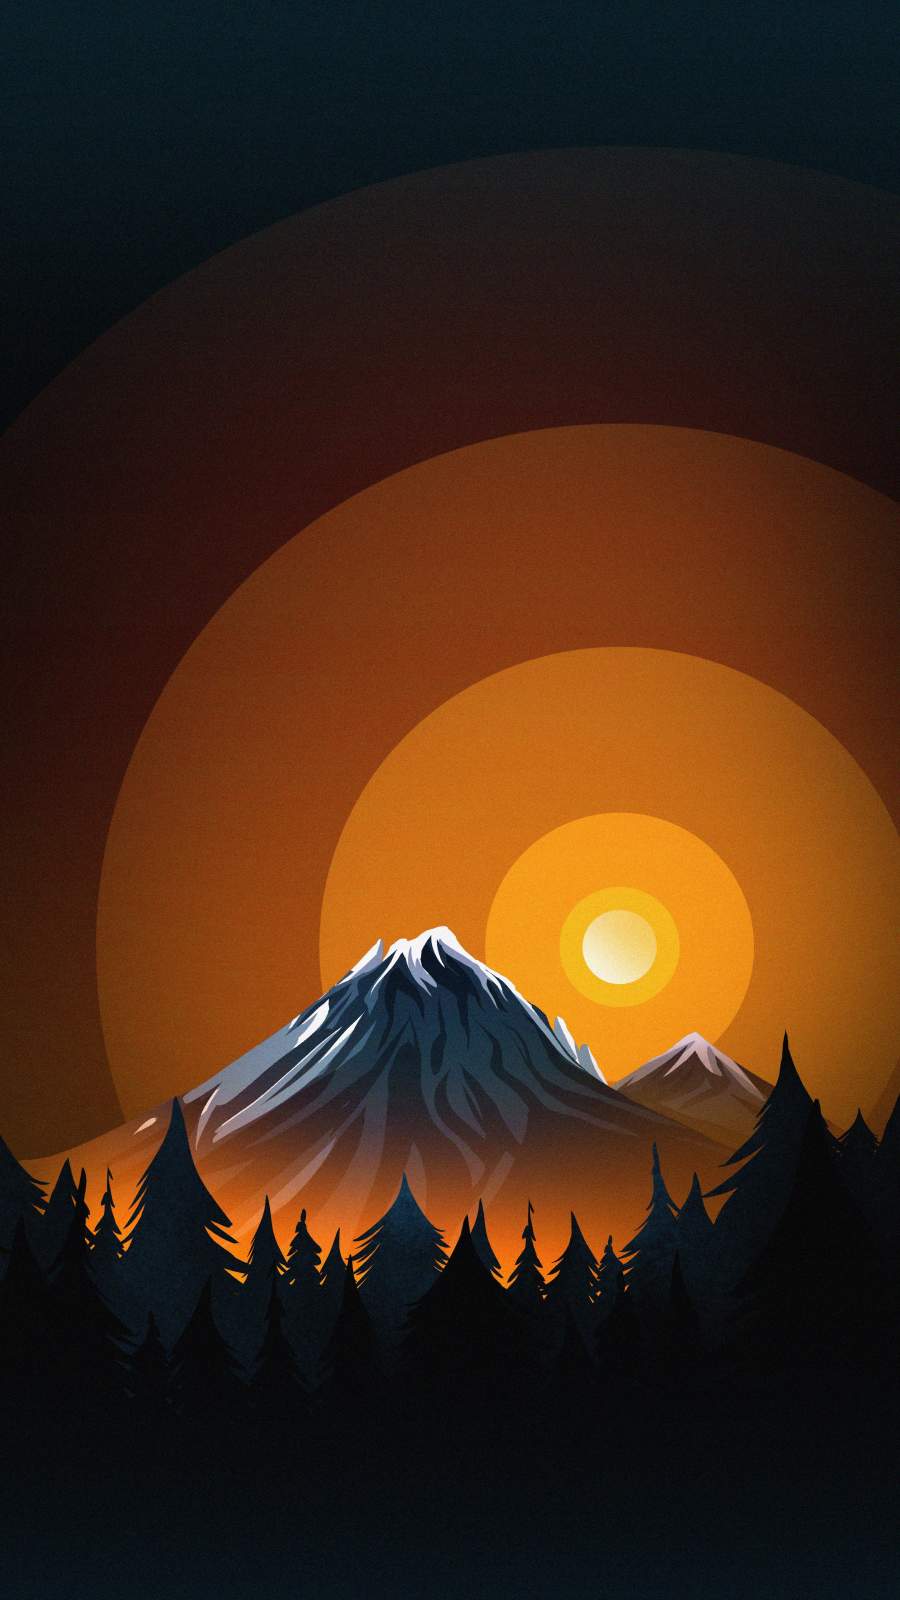 Mountains Minimalistic 4K wallpaper